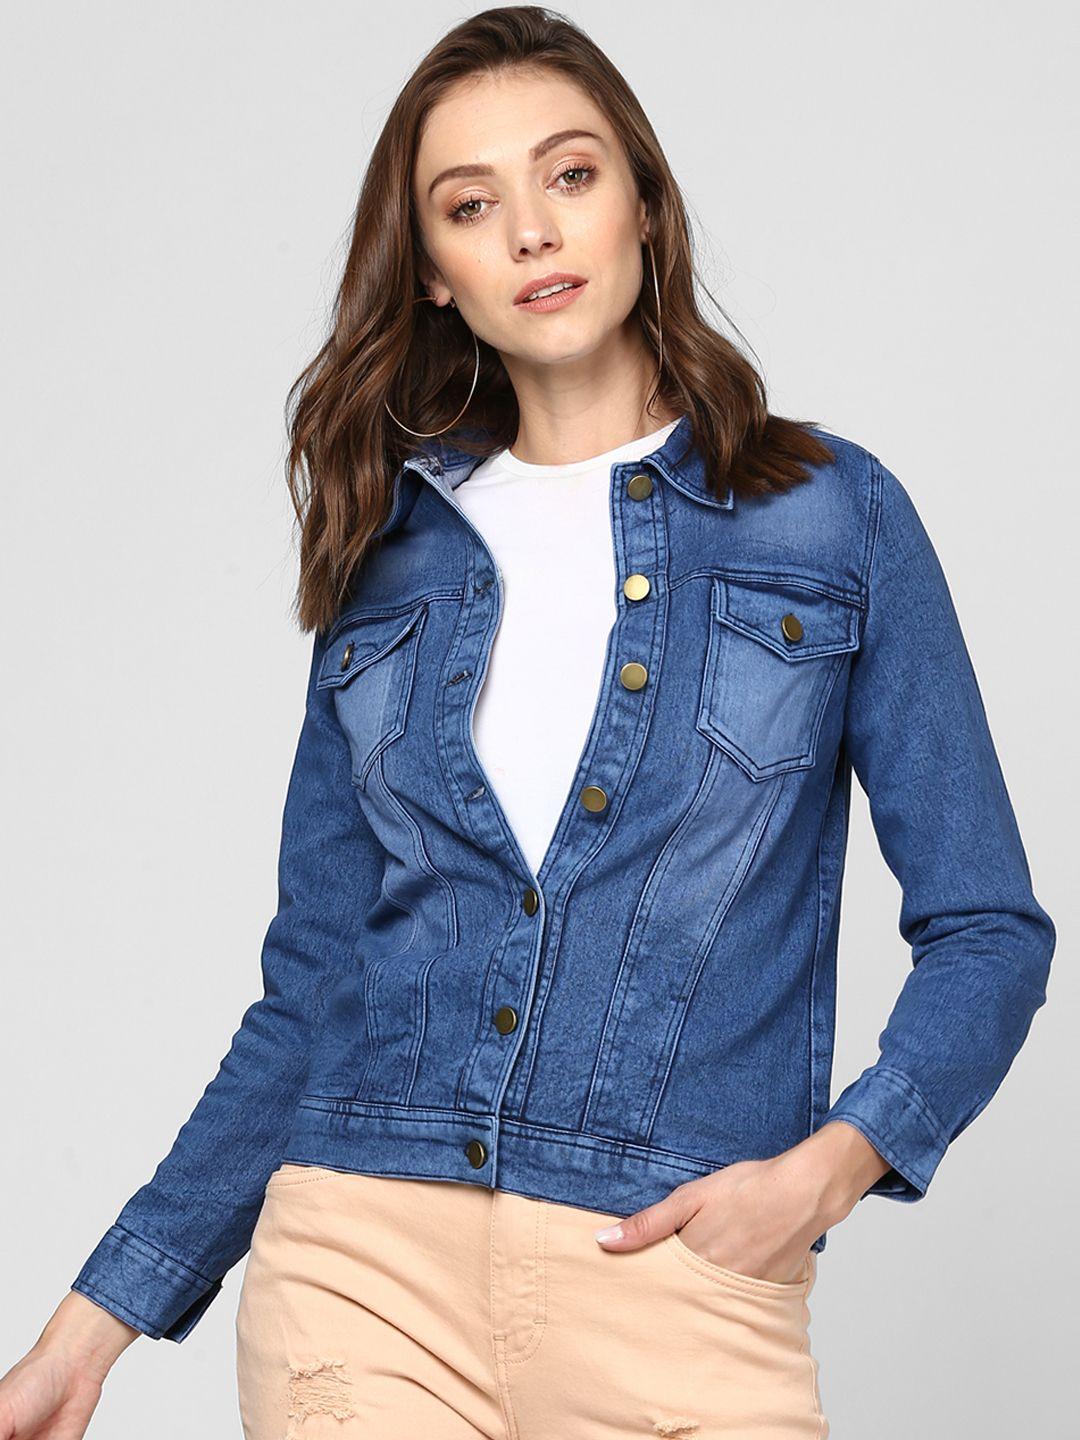 stylestone women blue solid denim jacket